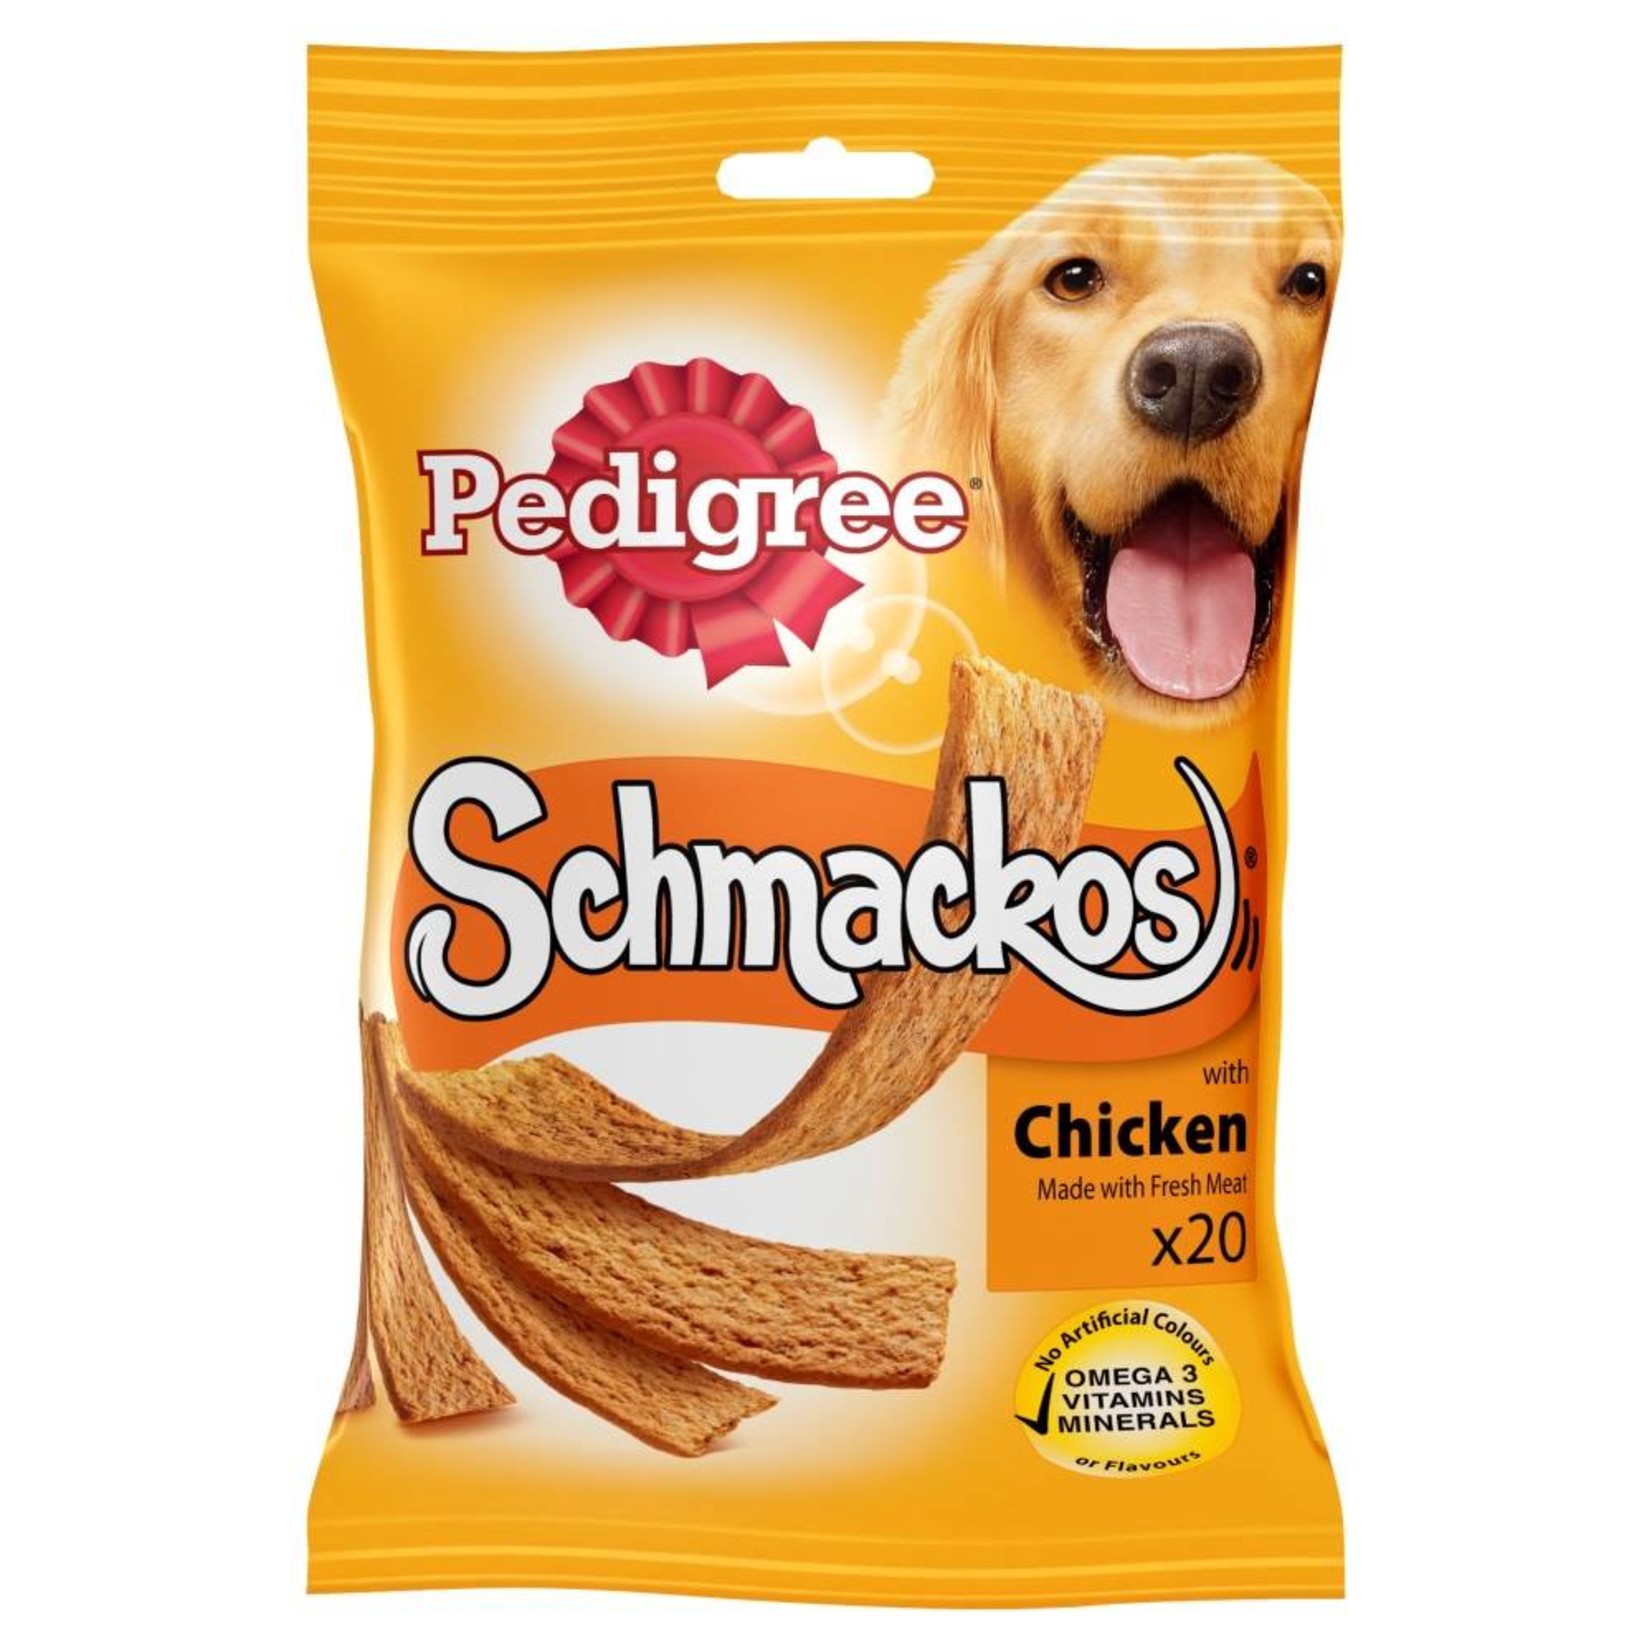 Pedigree Schmackos Dog Treats, Poultry